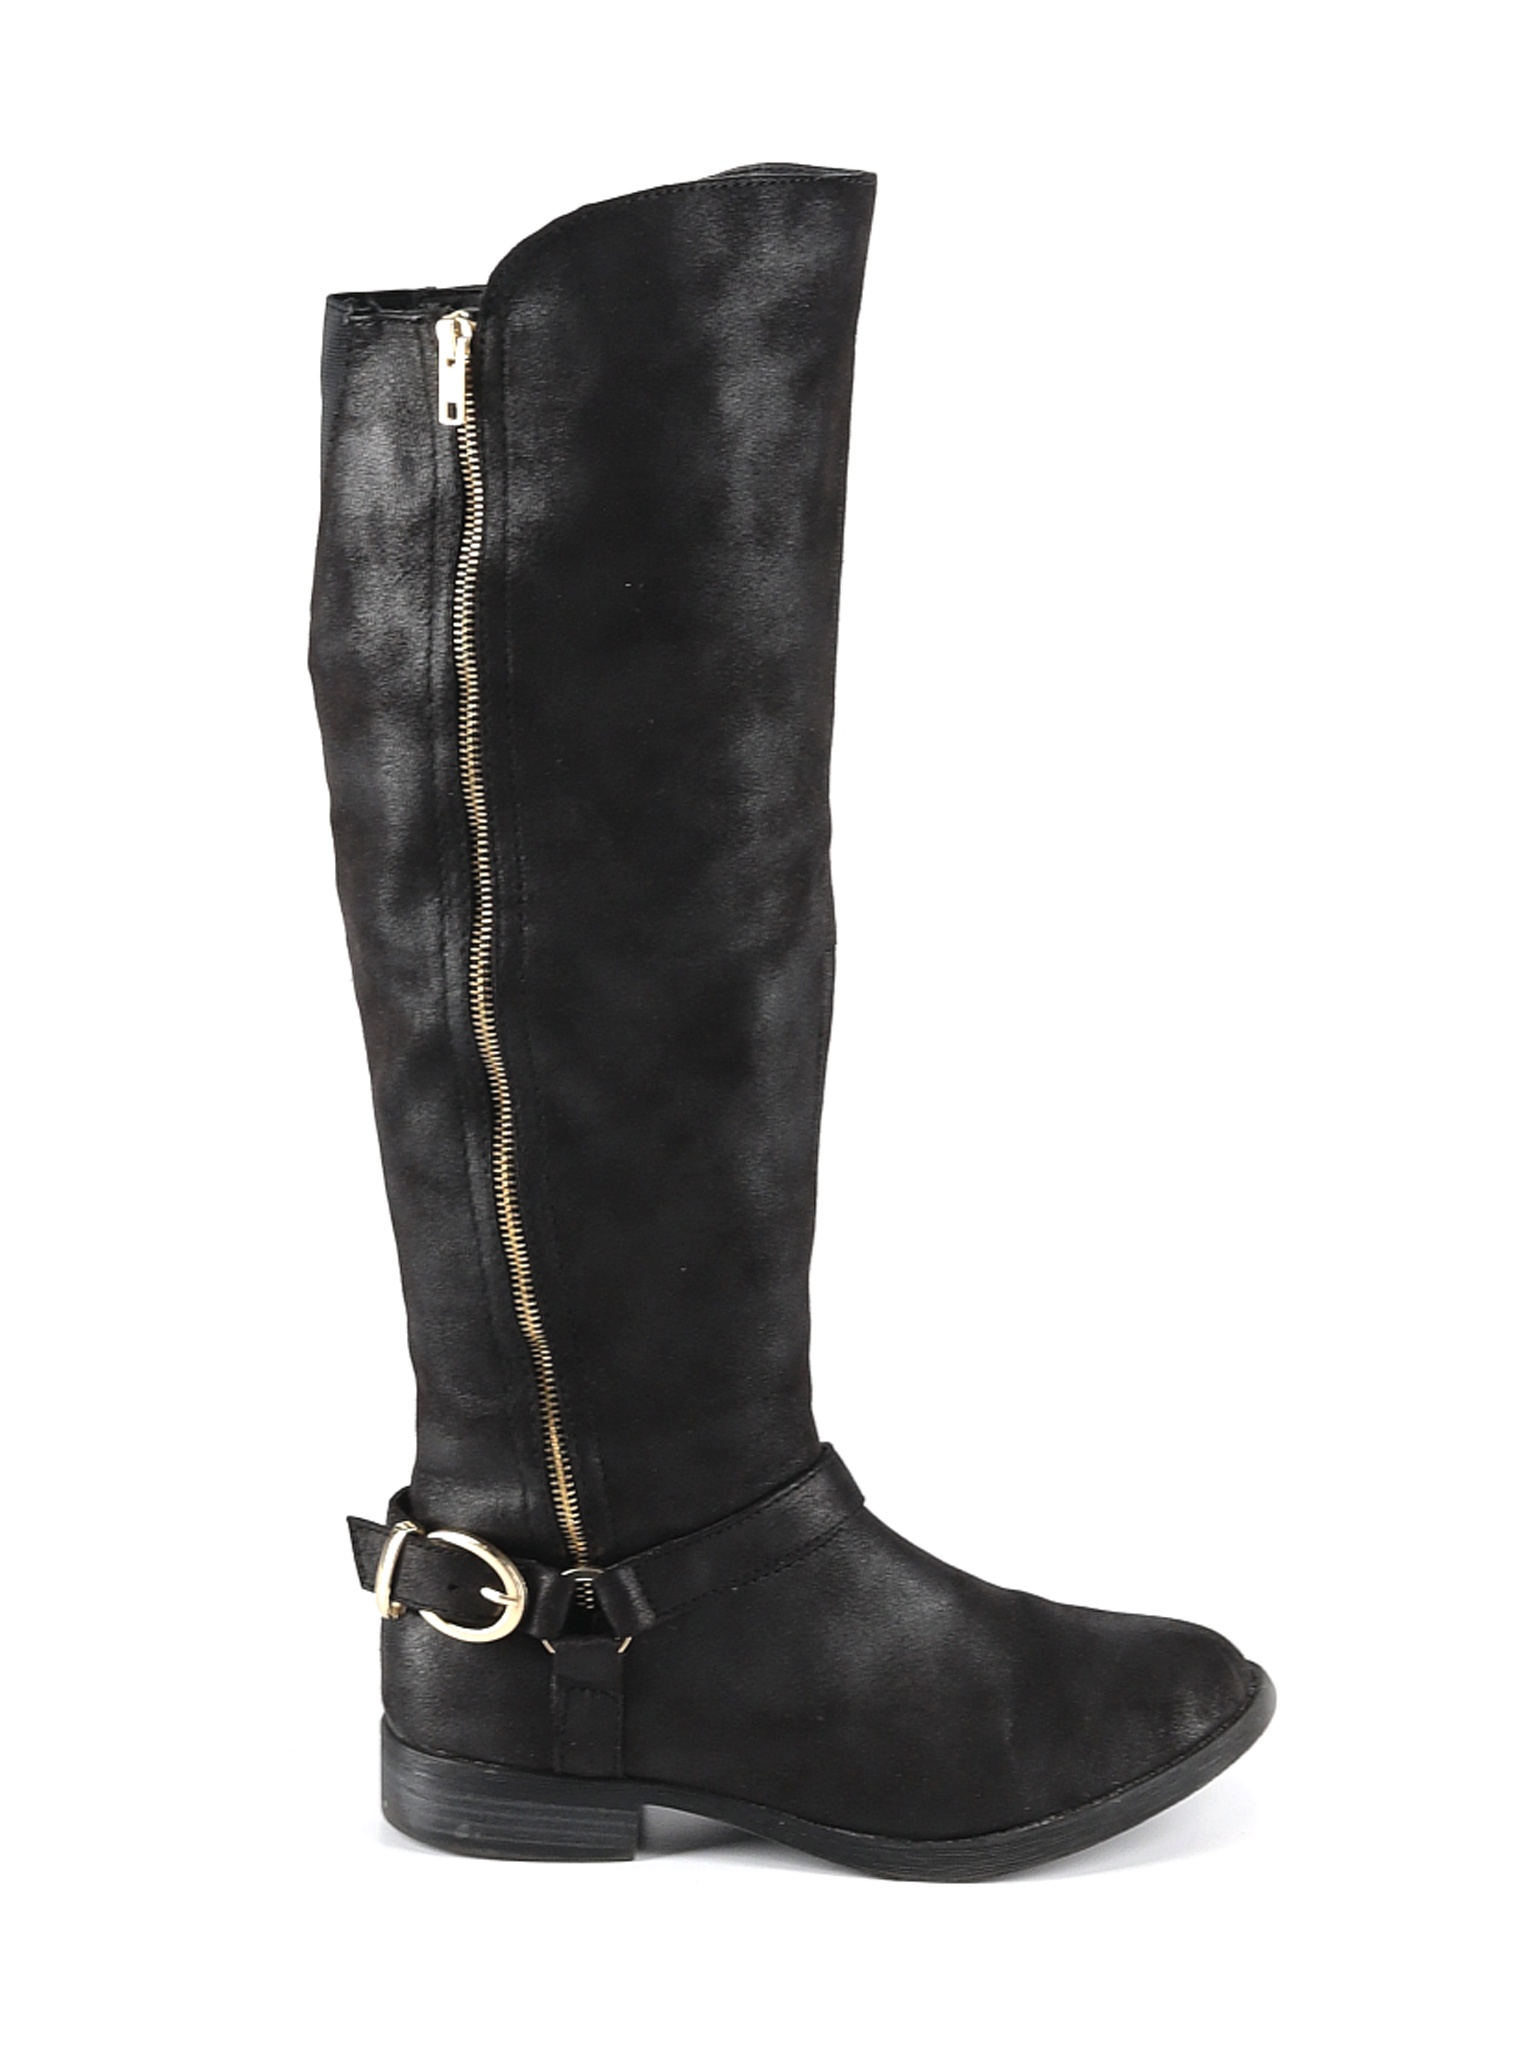 Mossimo Women Black Boots US 9 | eBay